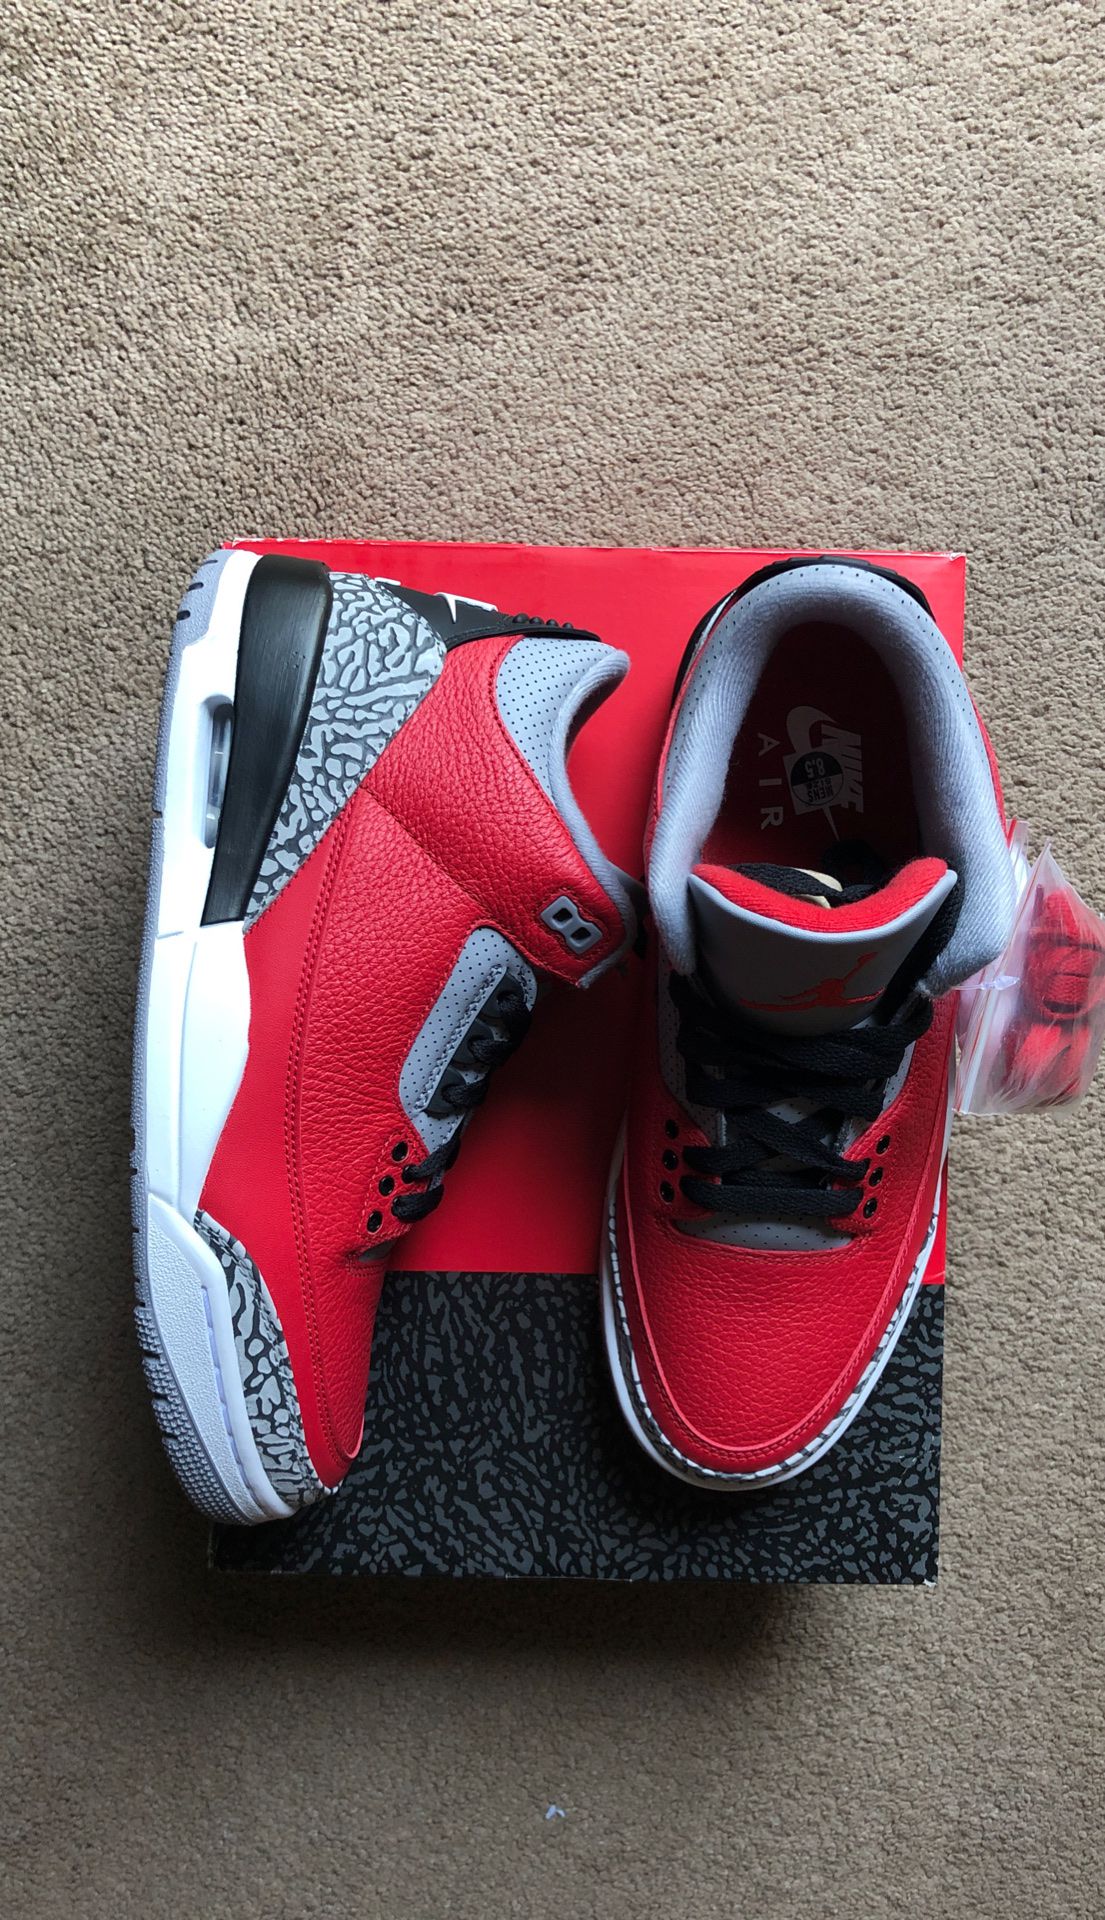 Nike Air Jordan 3 SE Unite Fire Red Size 8.5